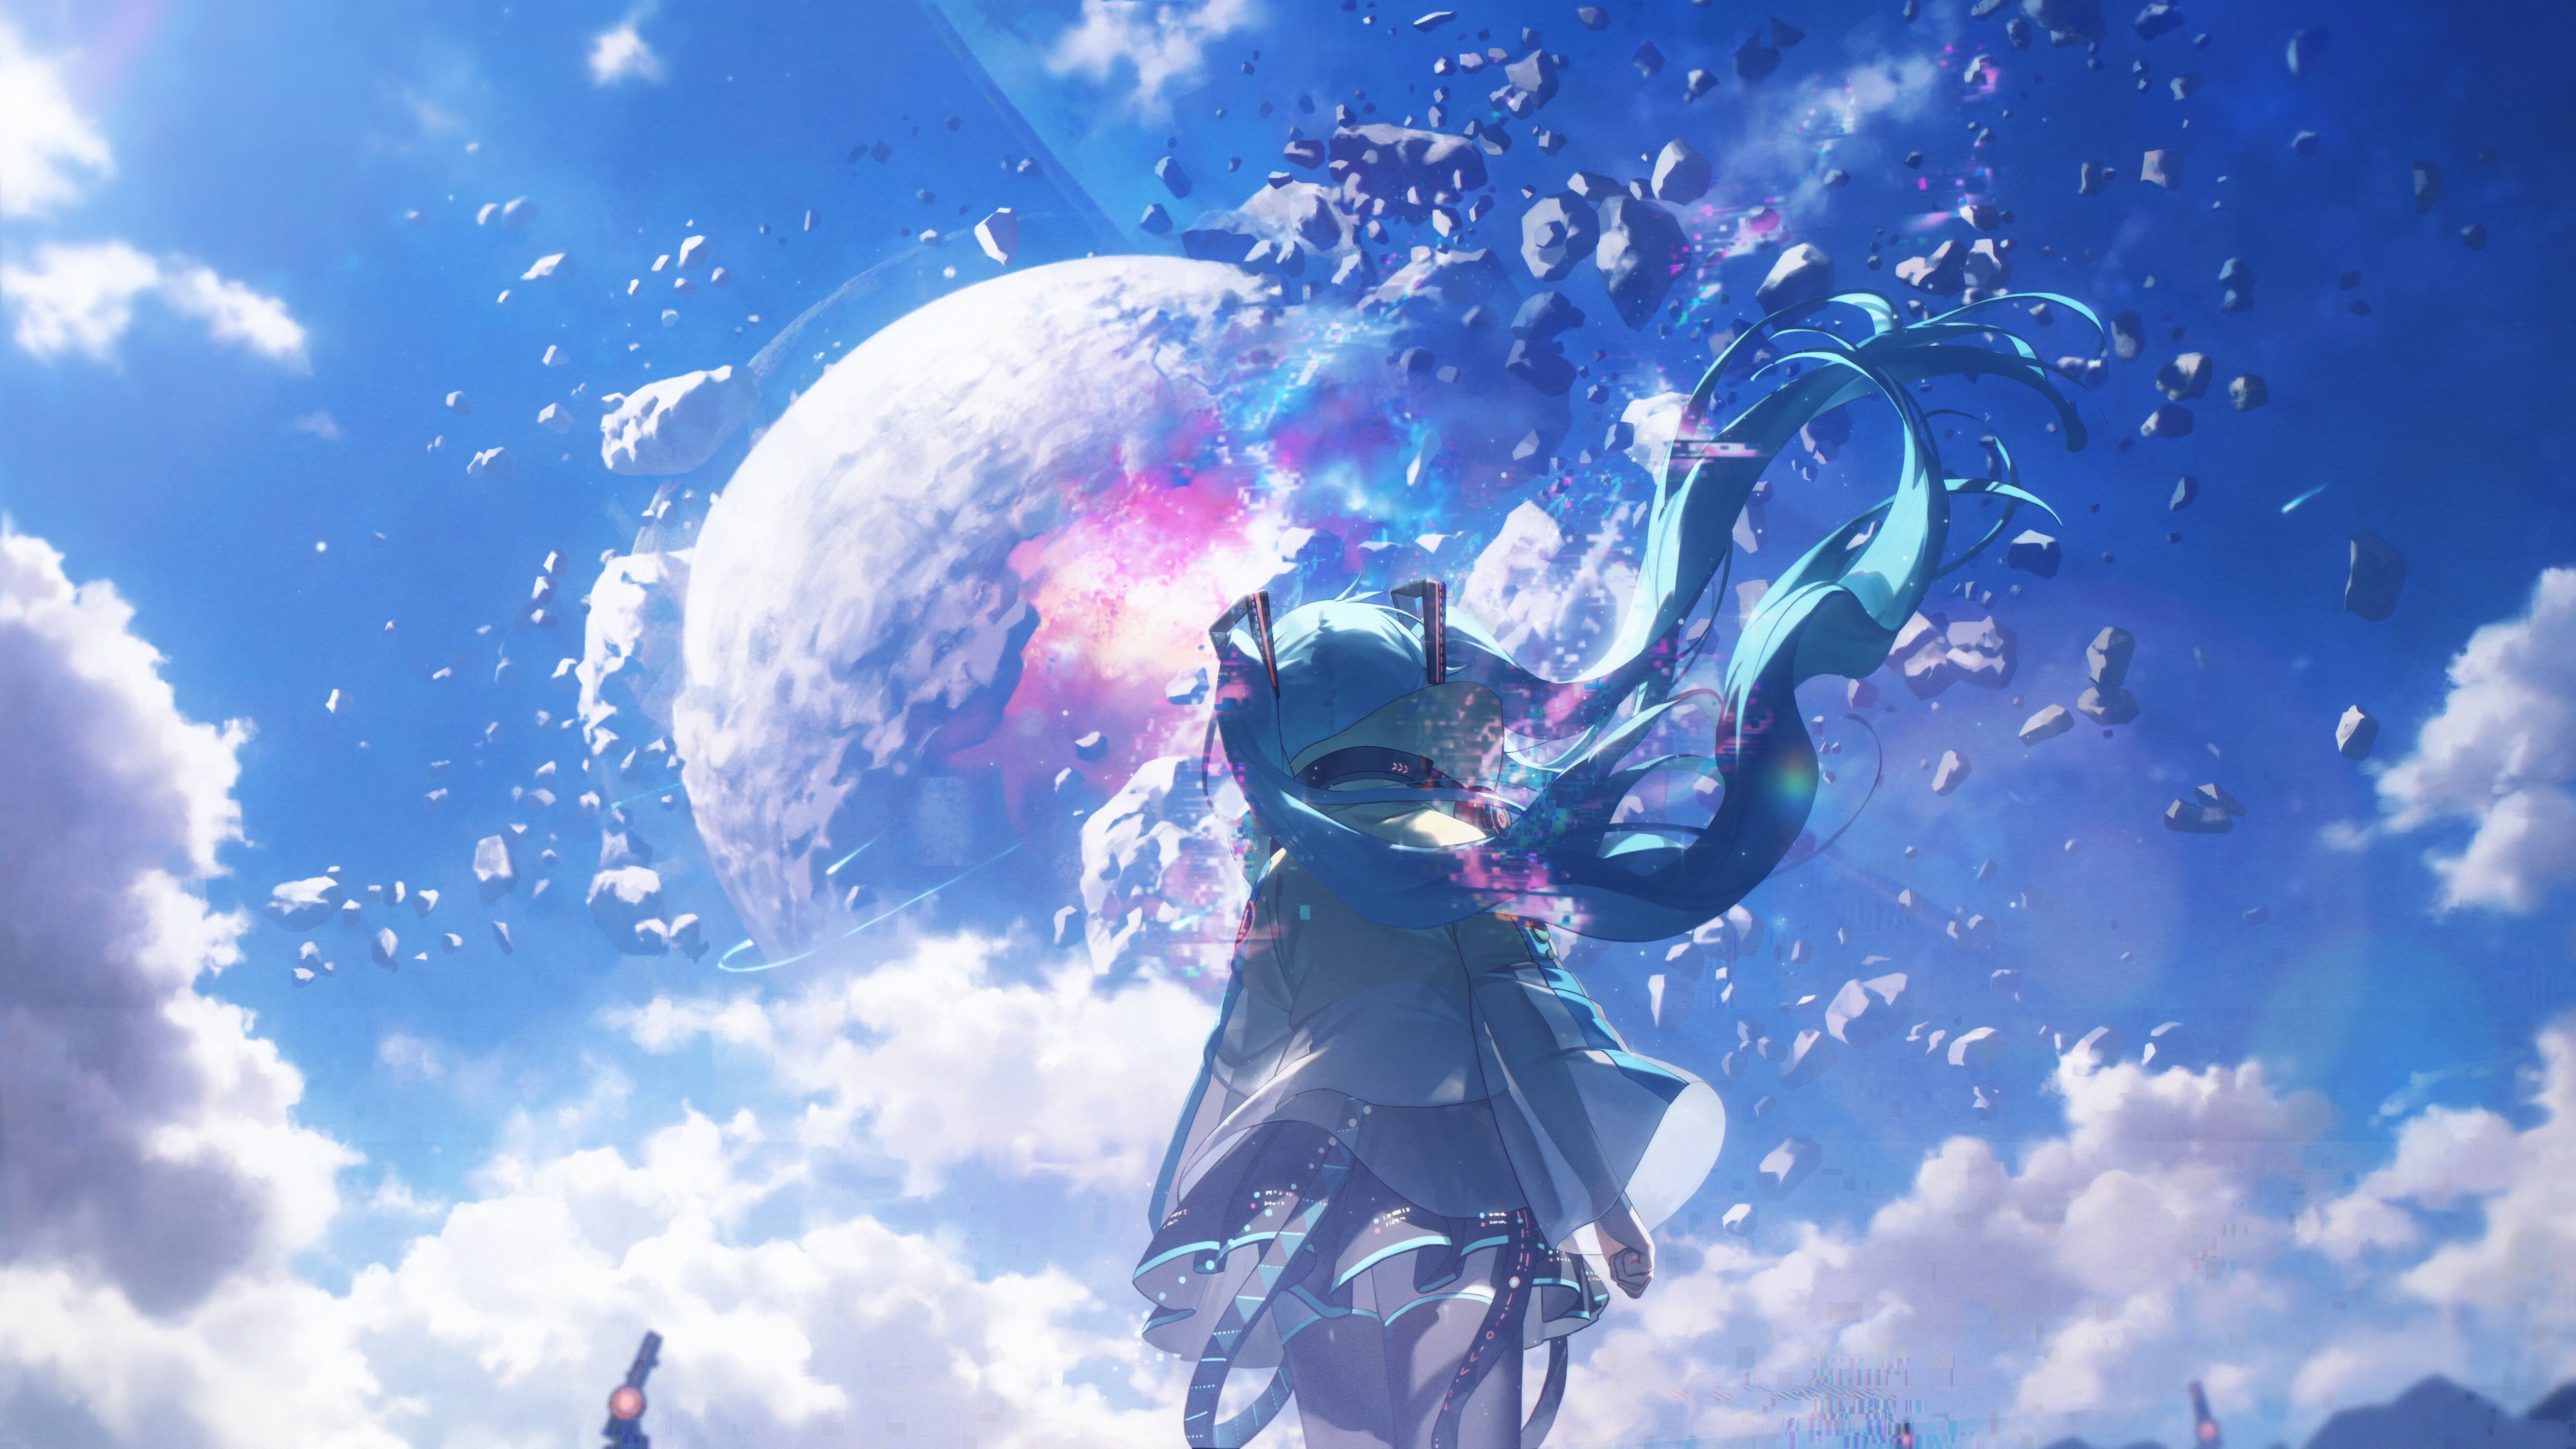 Anime Pixiv Hatsune Miku Vocaloid Anime Girls Sunlight Sky Clouds Planet  Looking Up Standing Blue Ha Wallpaper - Resolution:5333x3000 - ID:1387943 -  wallha.com